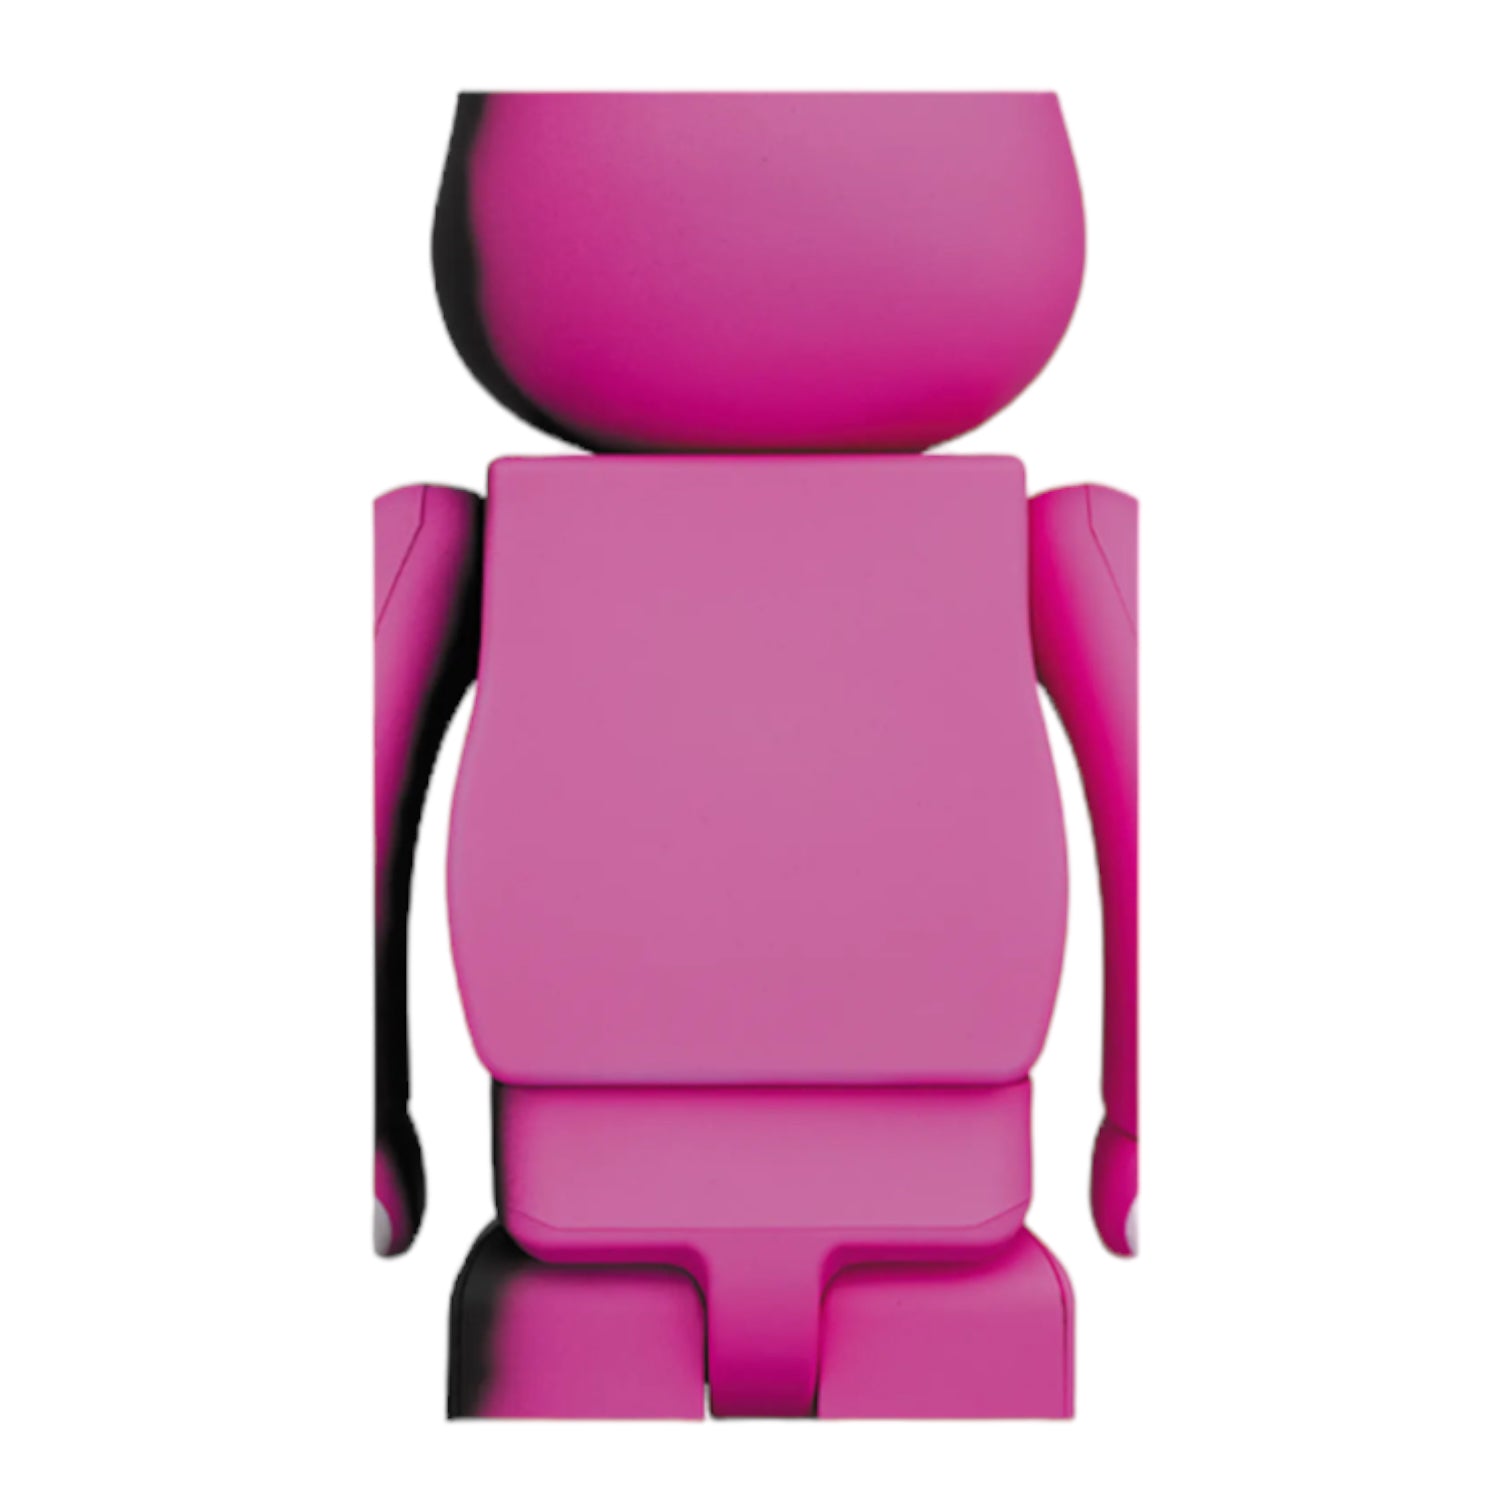 Bearbrick Breaking Bad Pink Bear 1000% - Pink Collectible Figurine